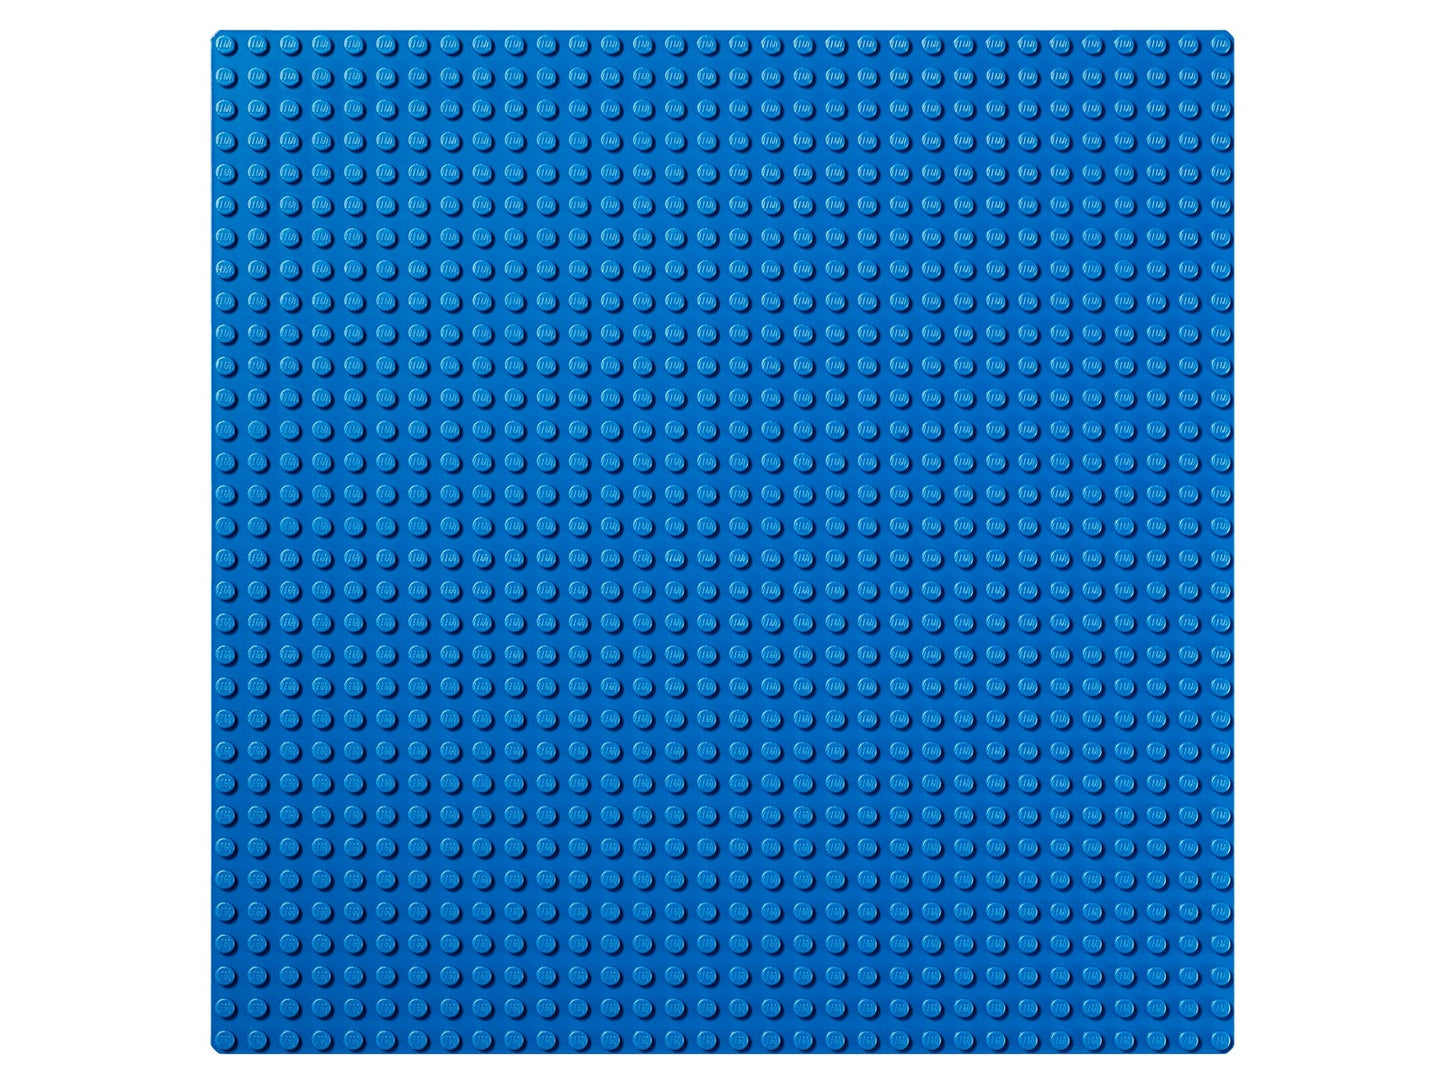 Lego Classic Blue Baseplate 10714